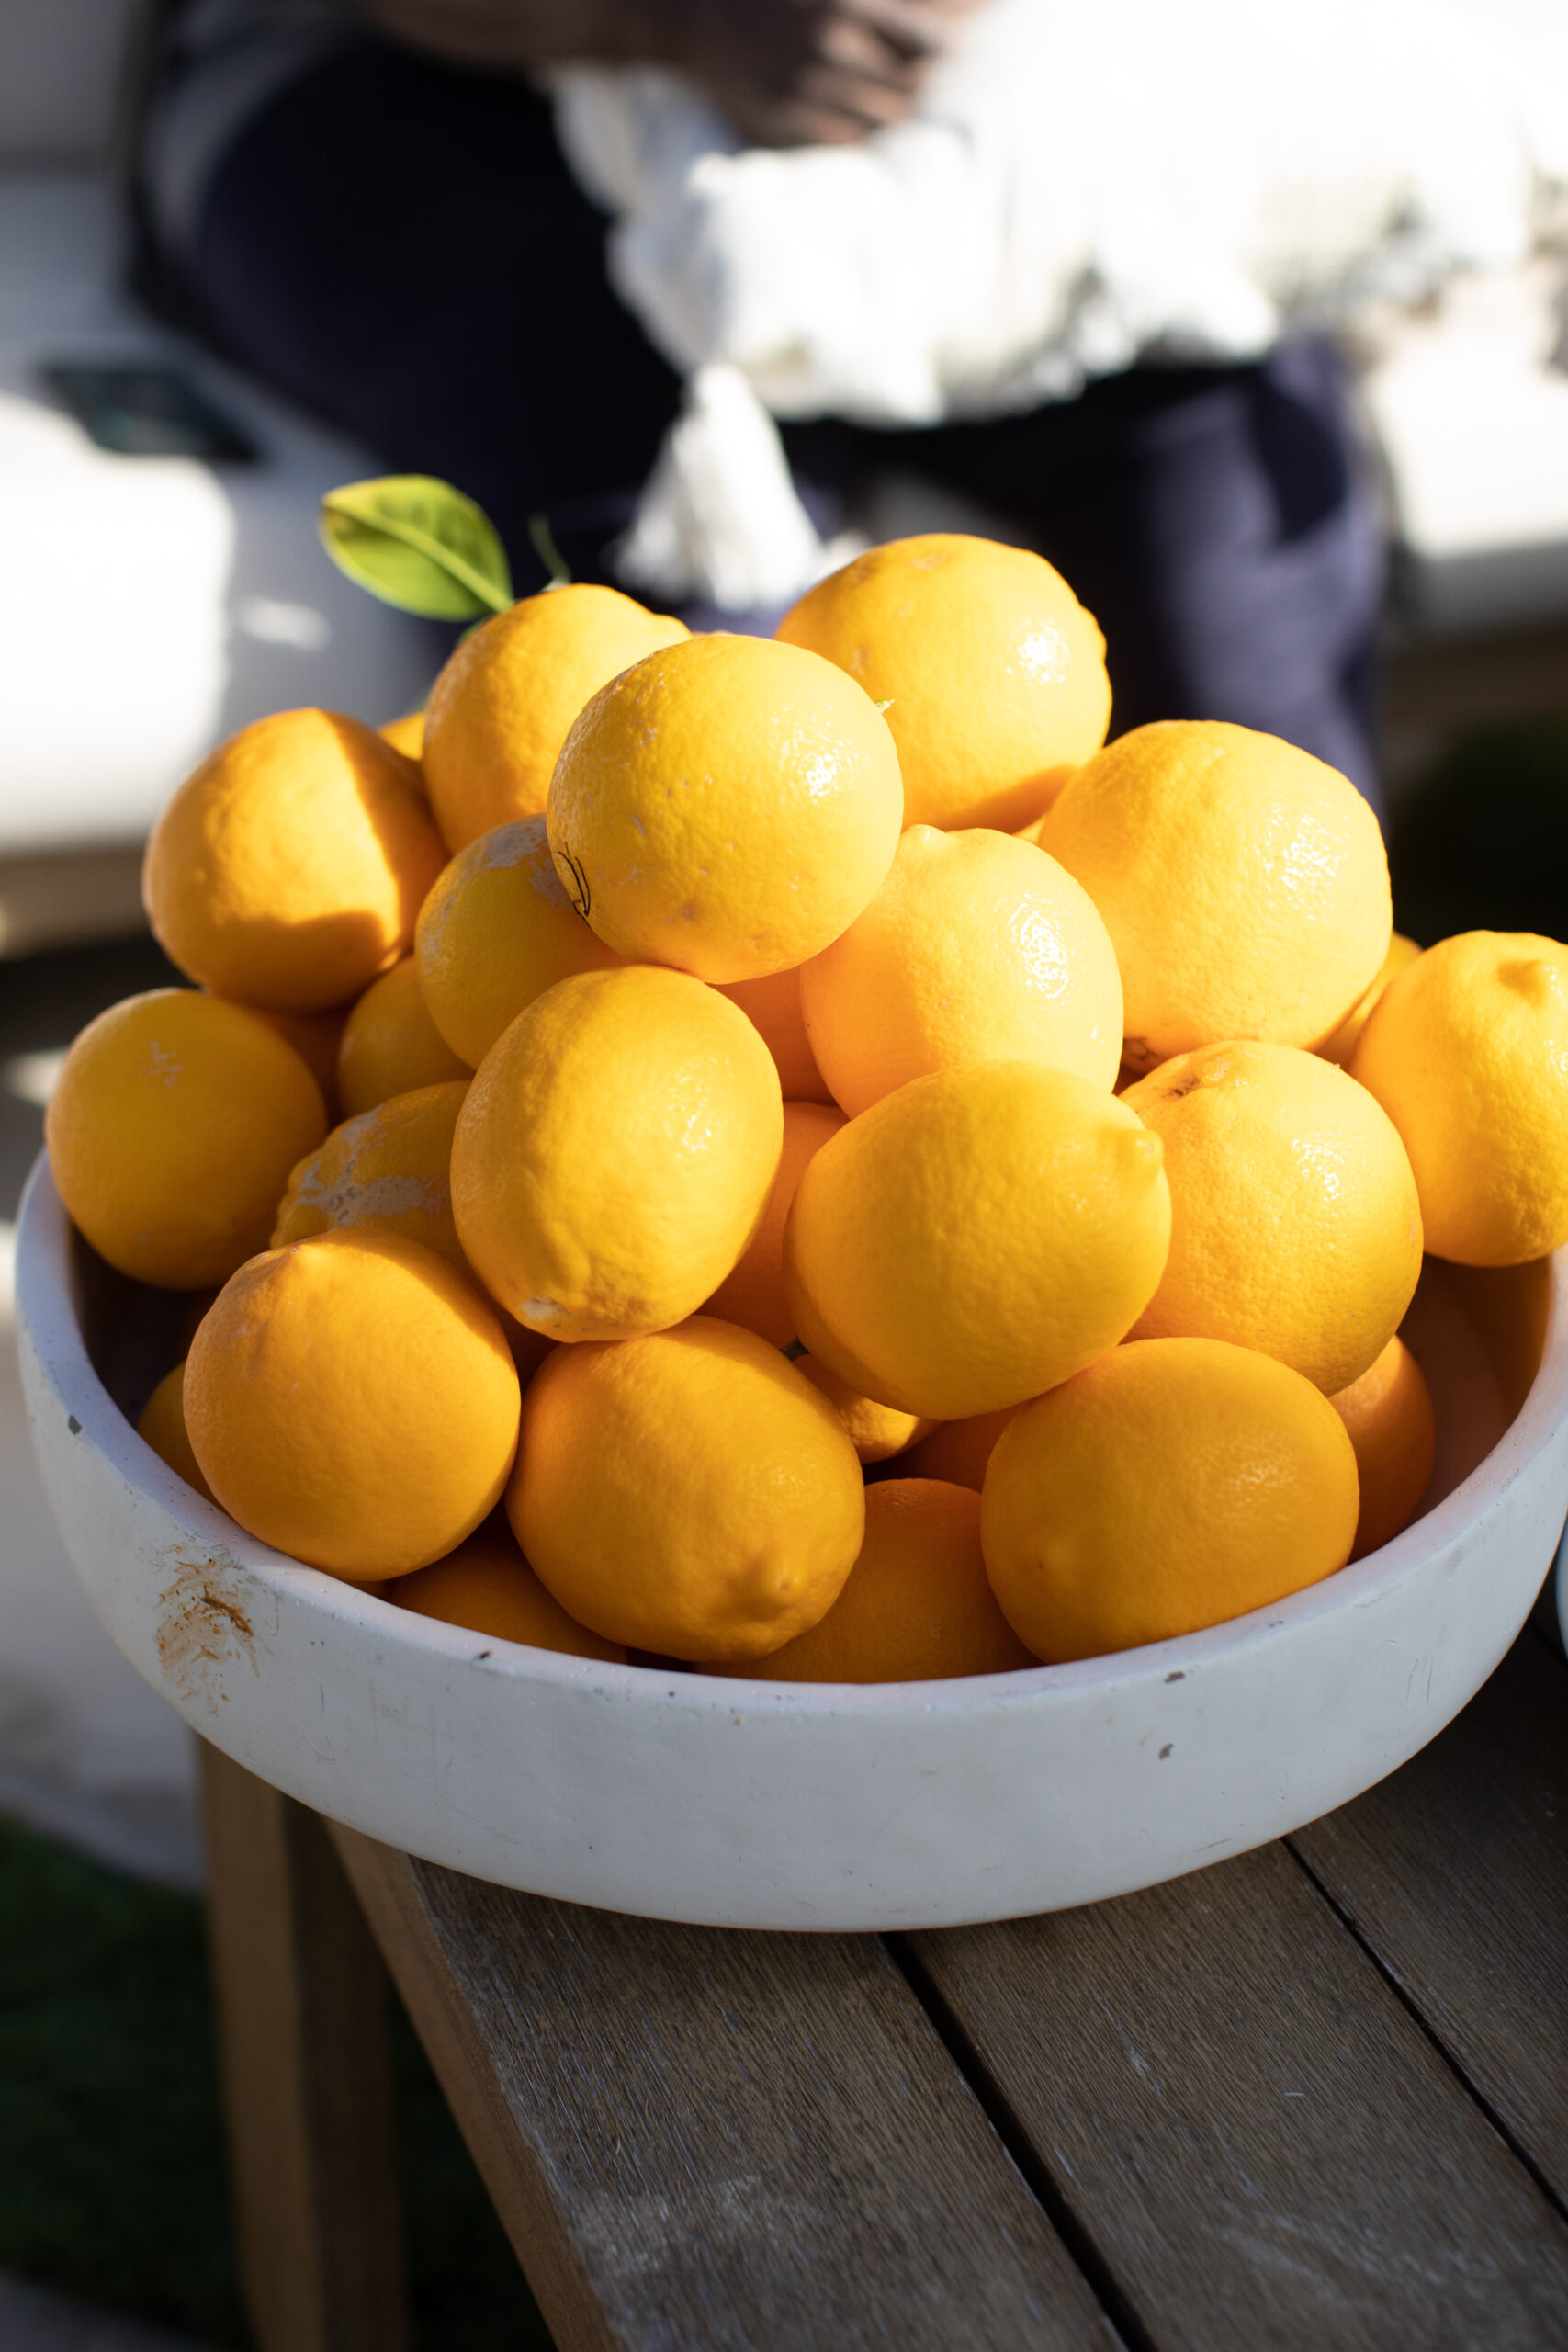 Lemon Harvest and Recipe Ideas